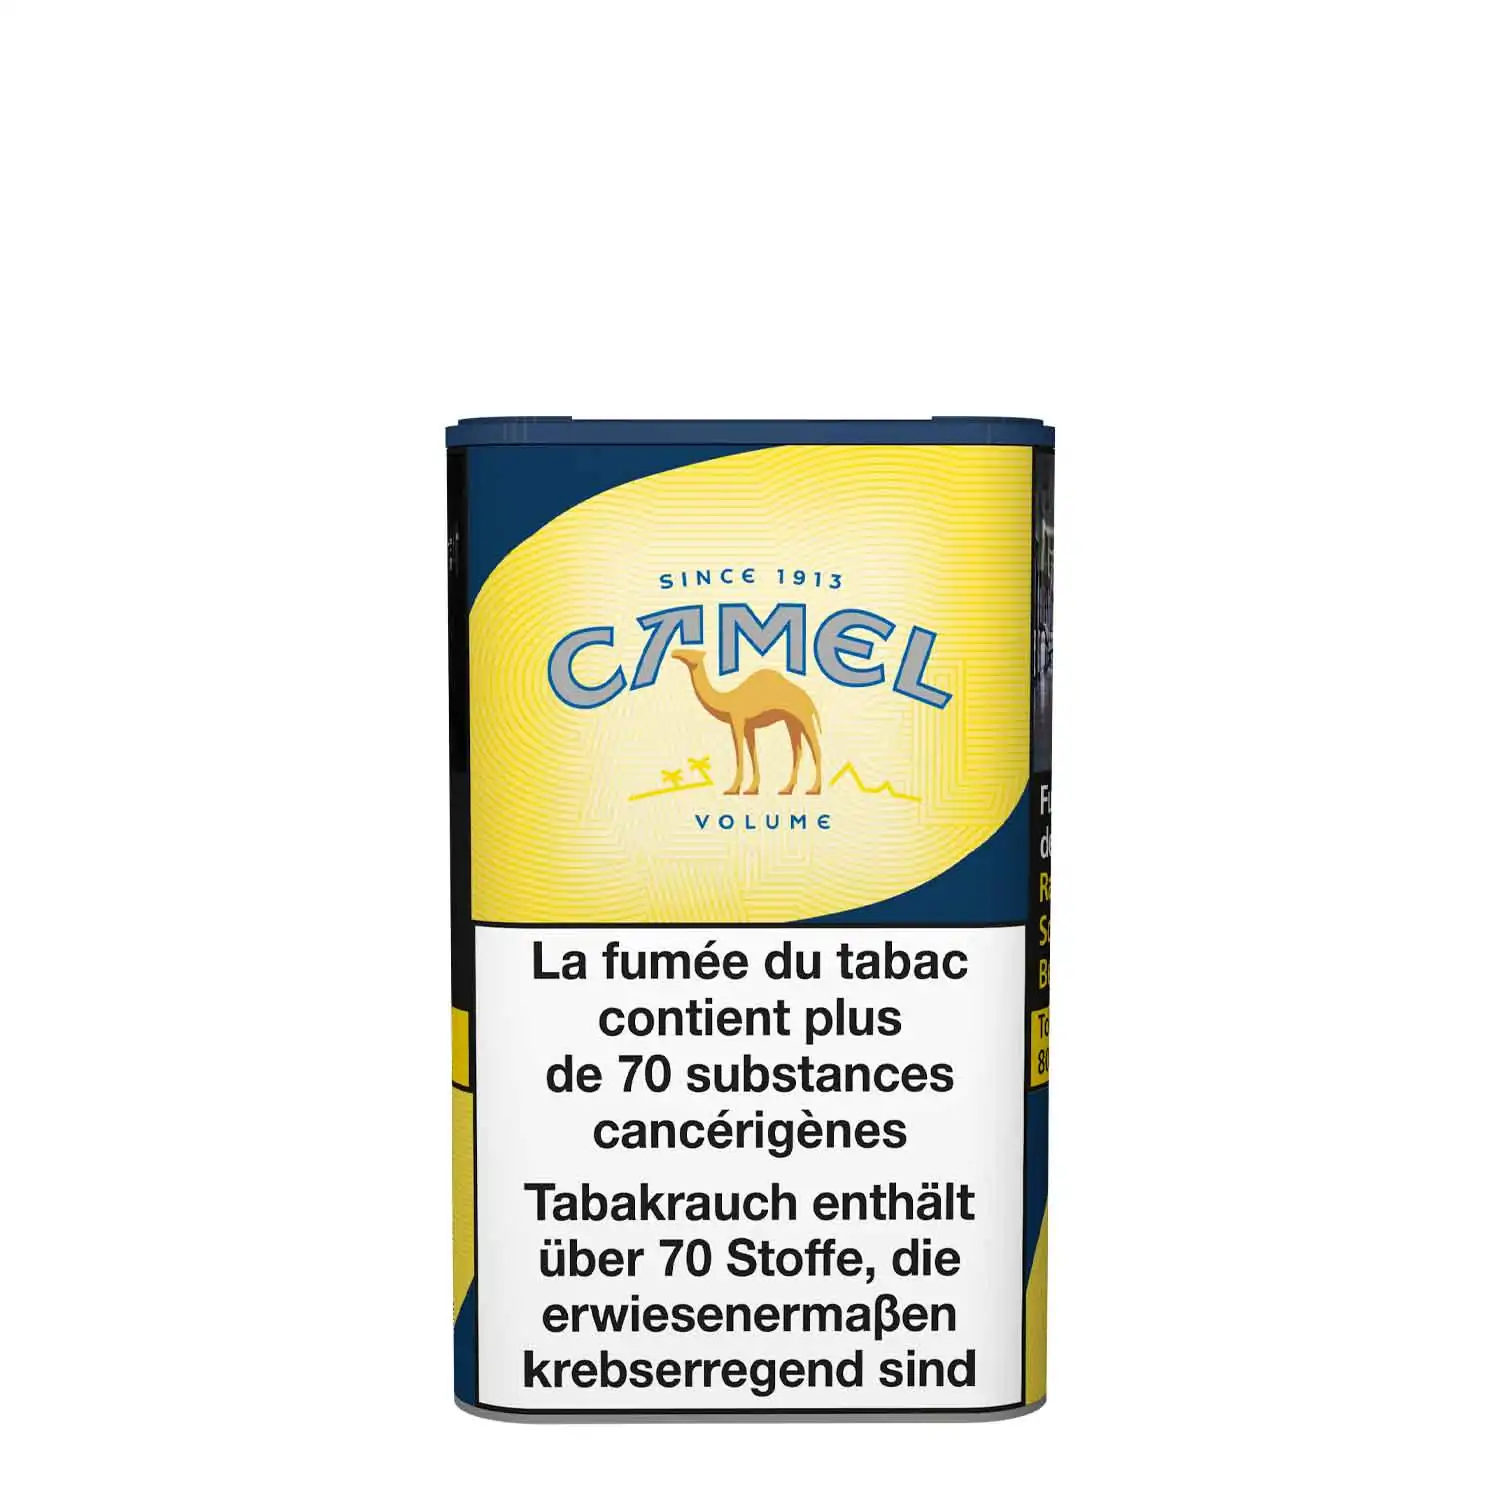 Camel volume jaune 80g - Buy at Real Tobacco